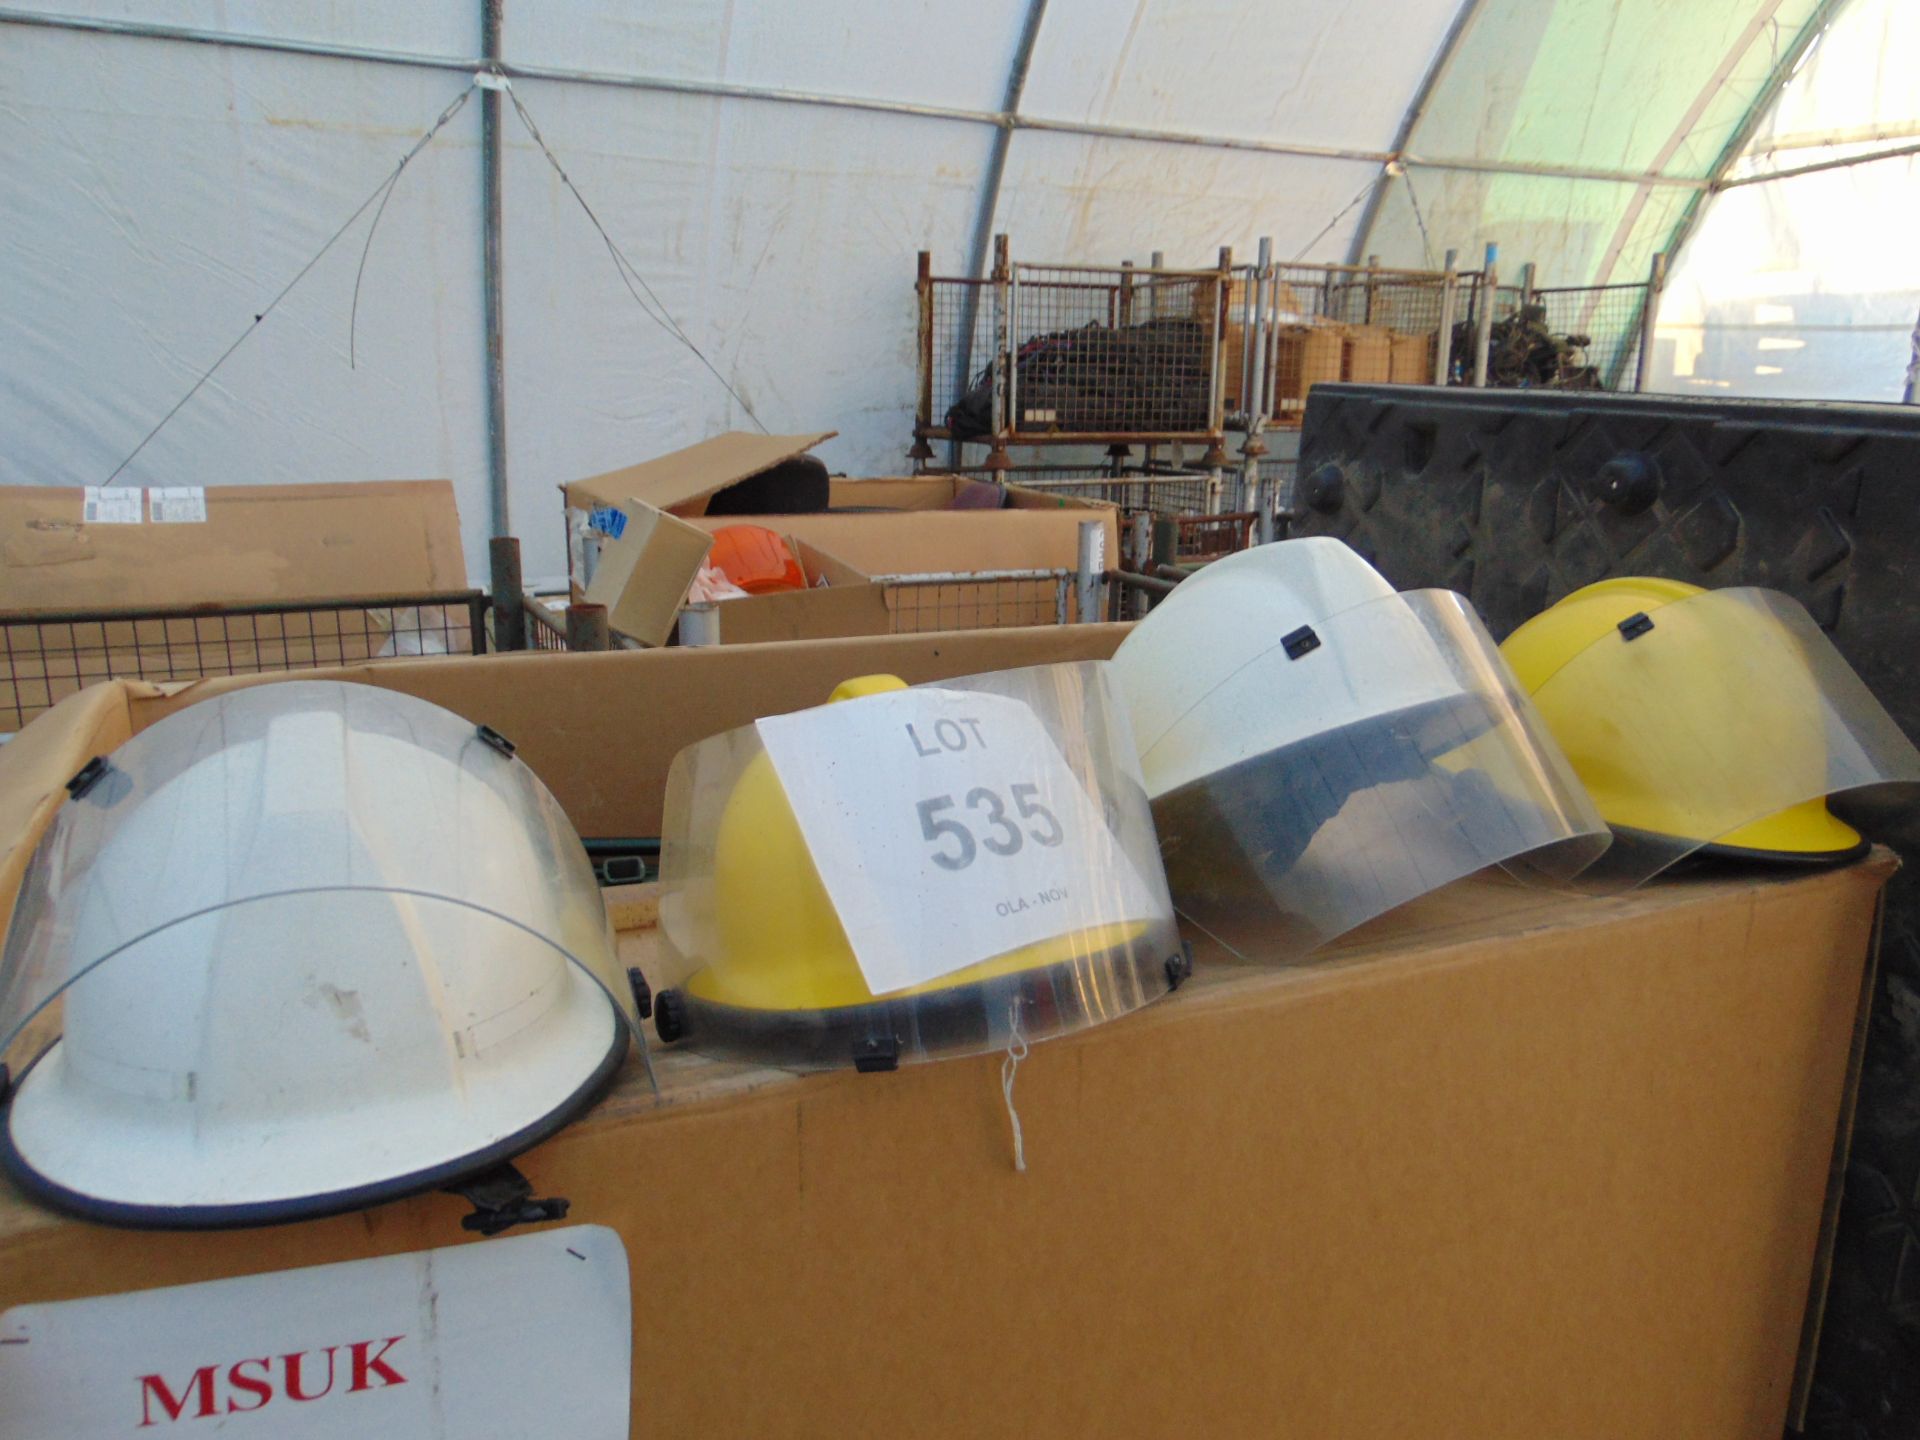 4 x Genuine Firemans Helmets as shown